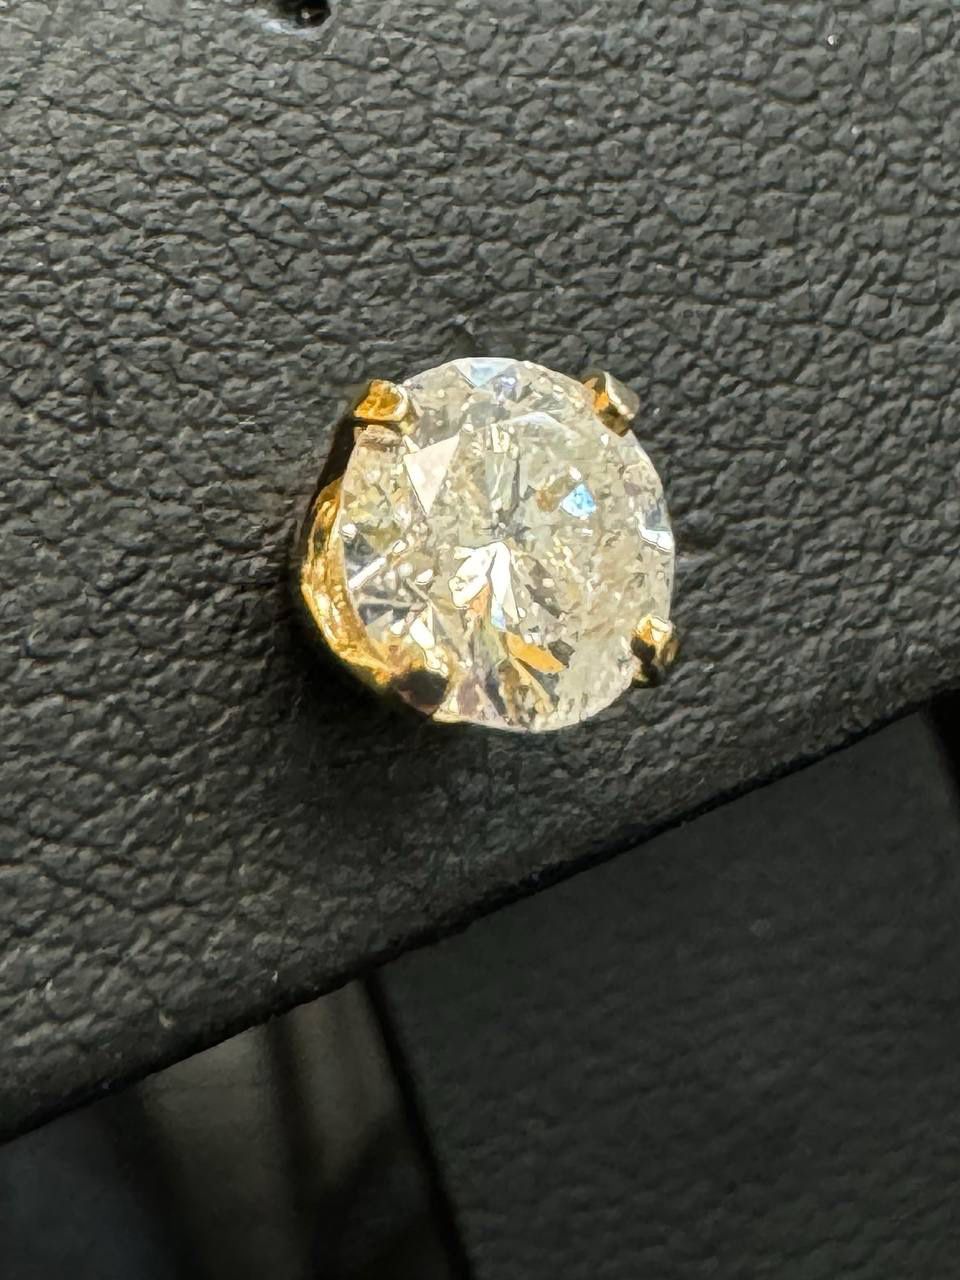 14k yellow gold 0.8 CTW diamond earring stud